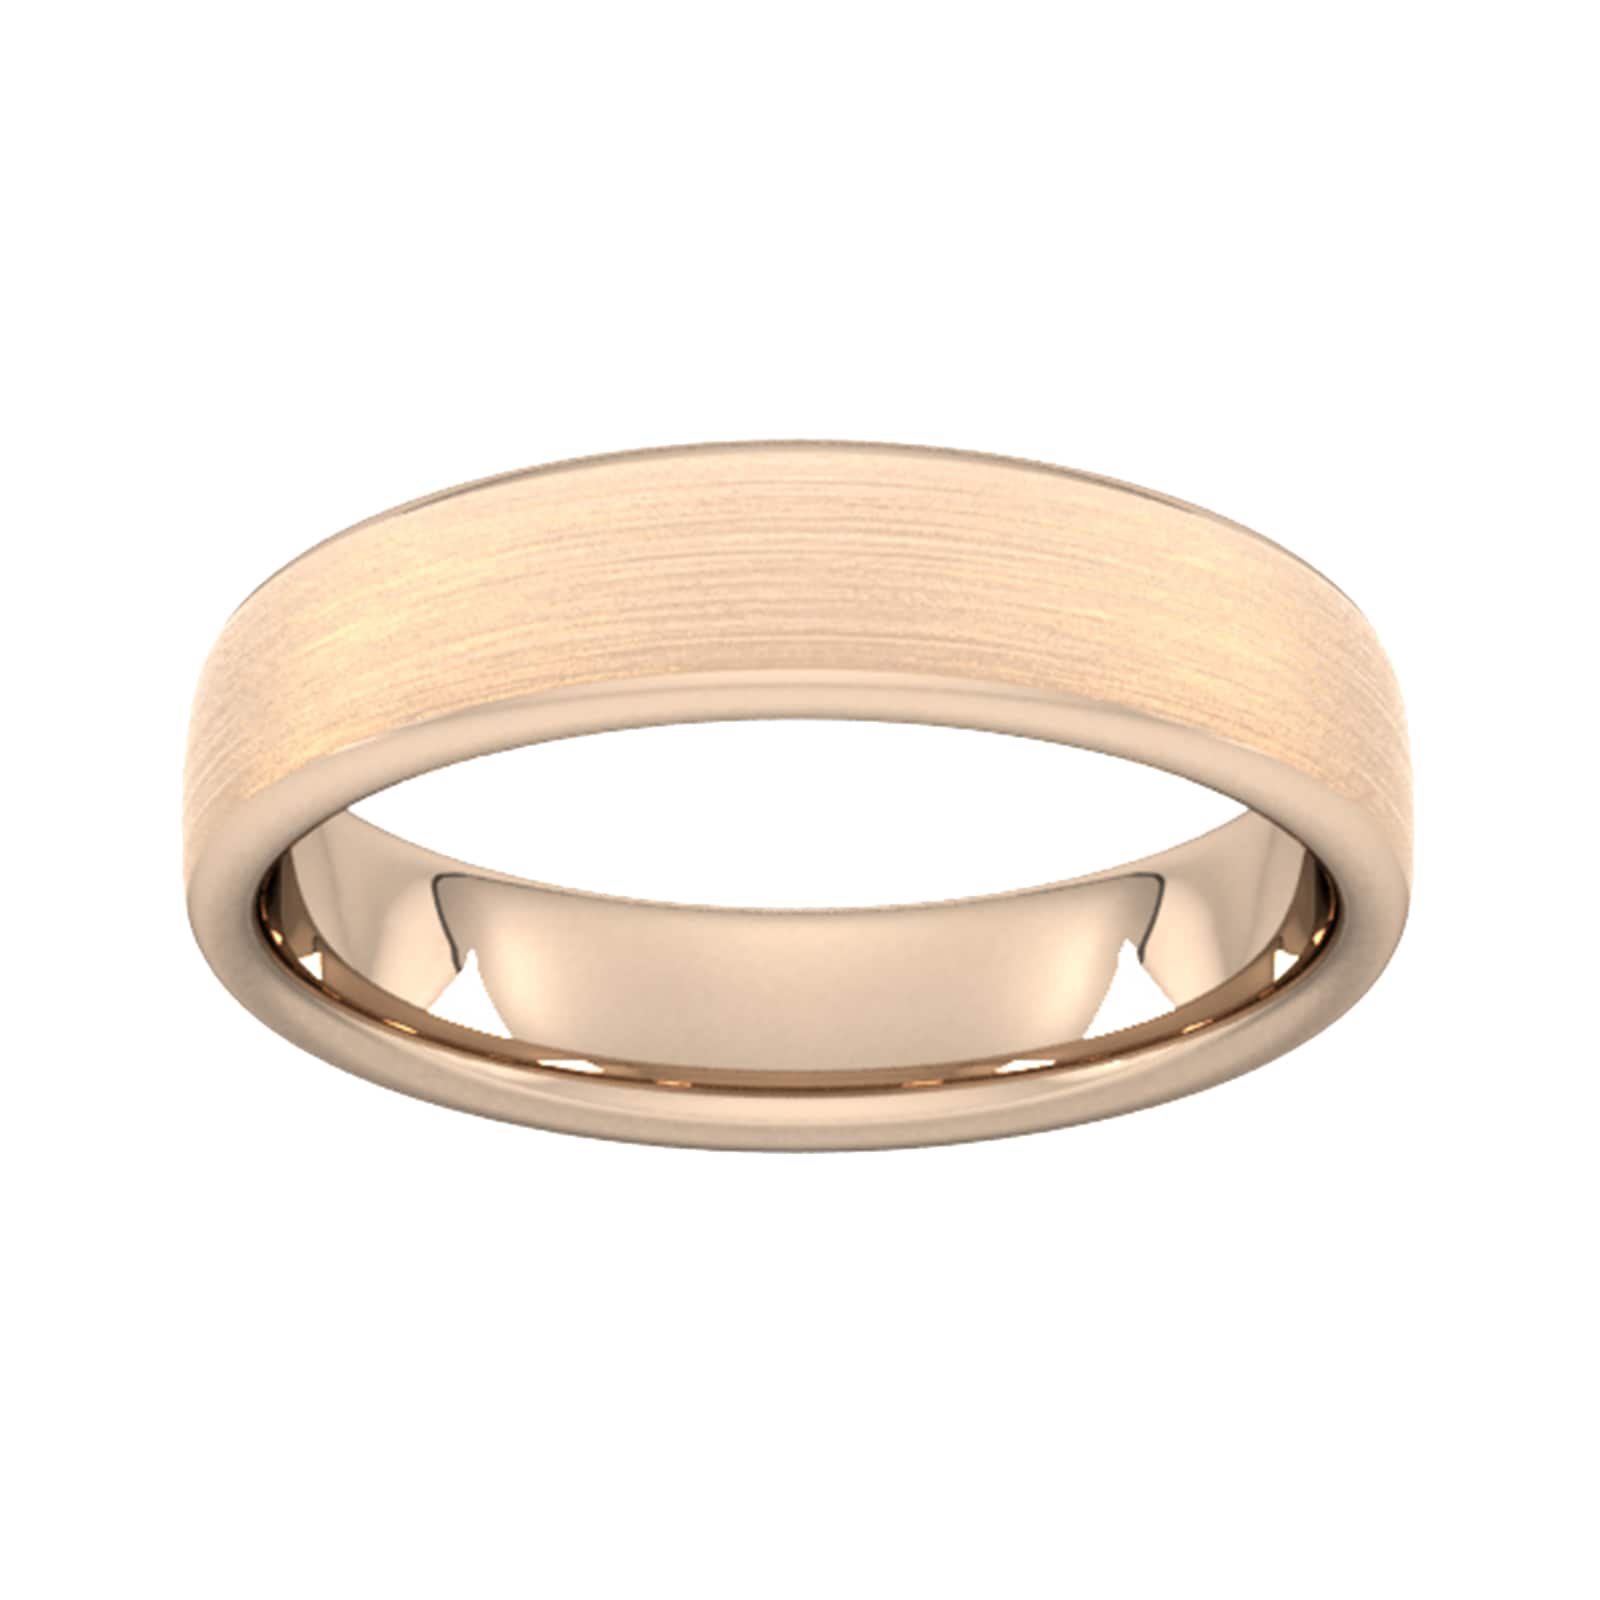 5mm D Shape Standard Matt Finished Wedding Ring In 9 Carat Rose Gold - Ring Size T